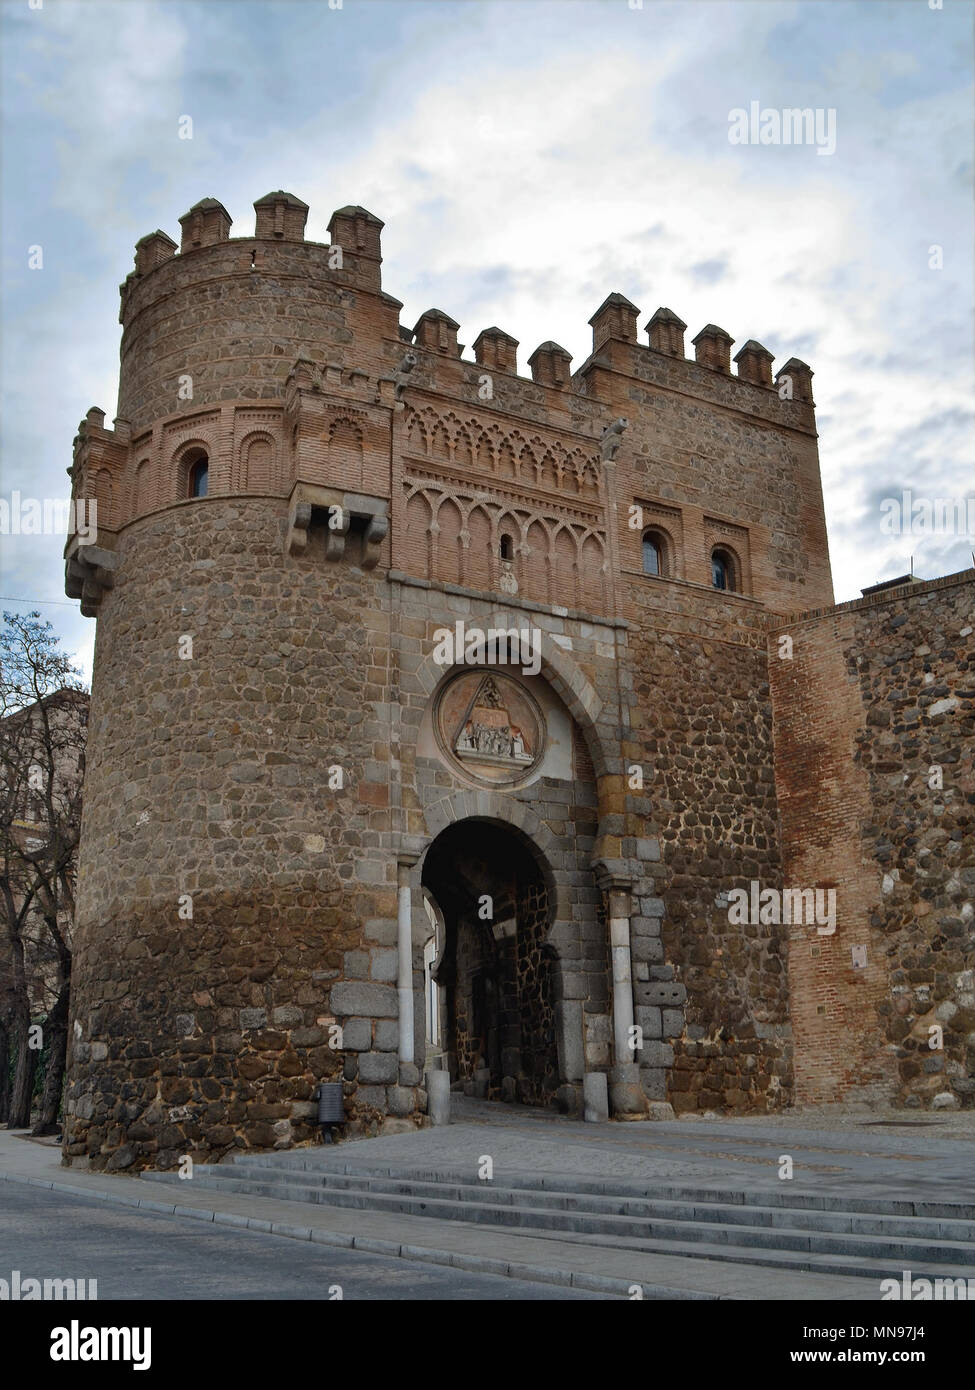 The Puerta del Sol Gate in Toledo, Spain Stock Photo